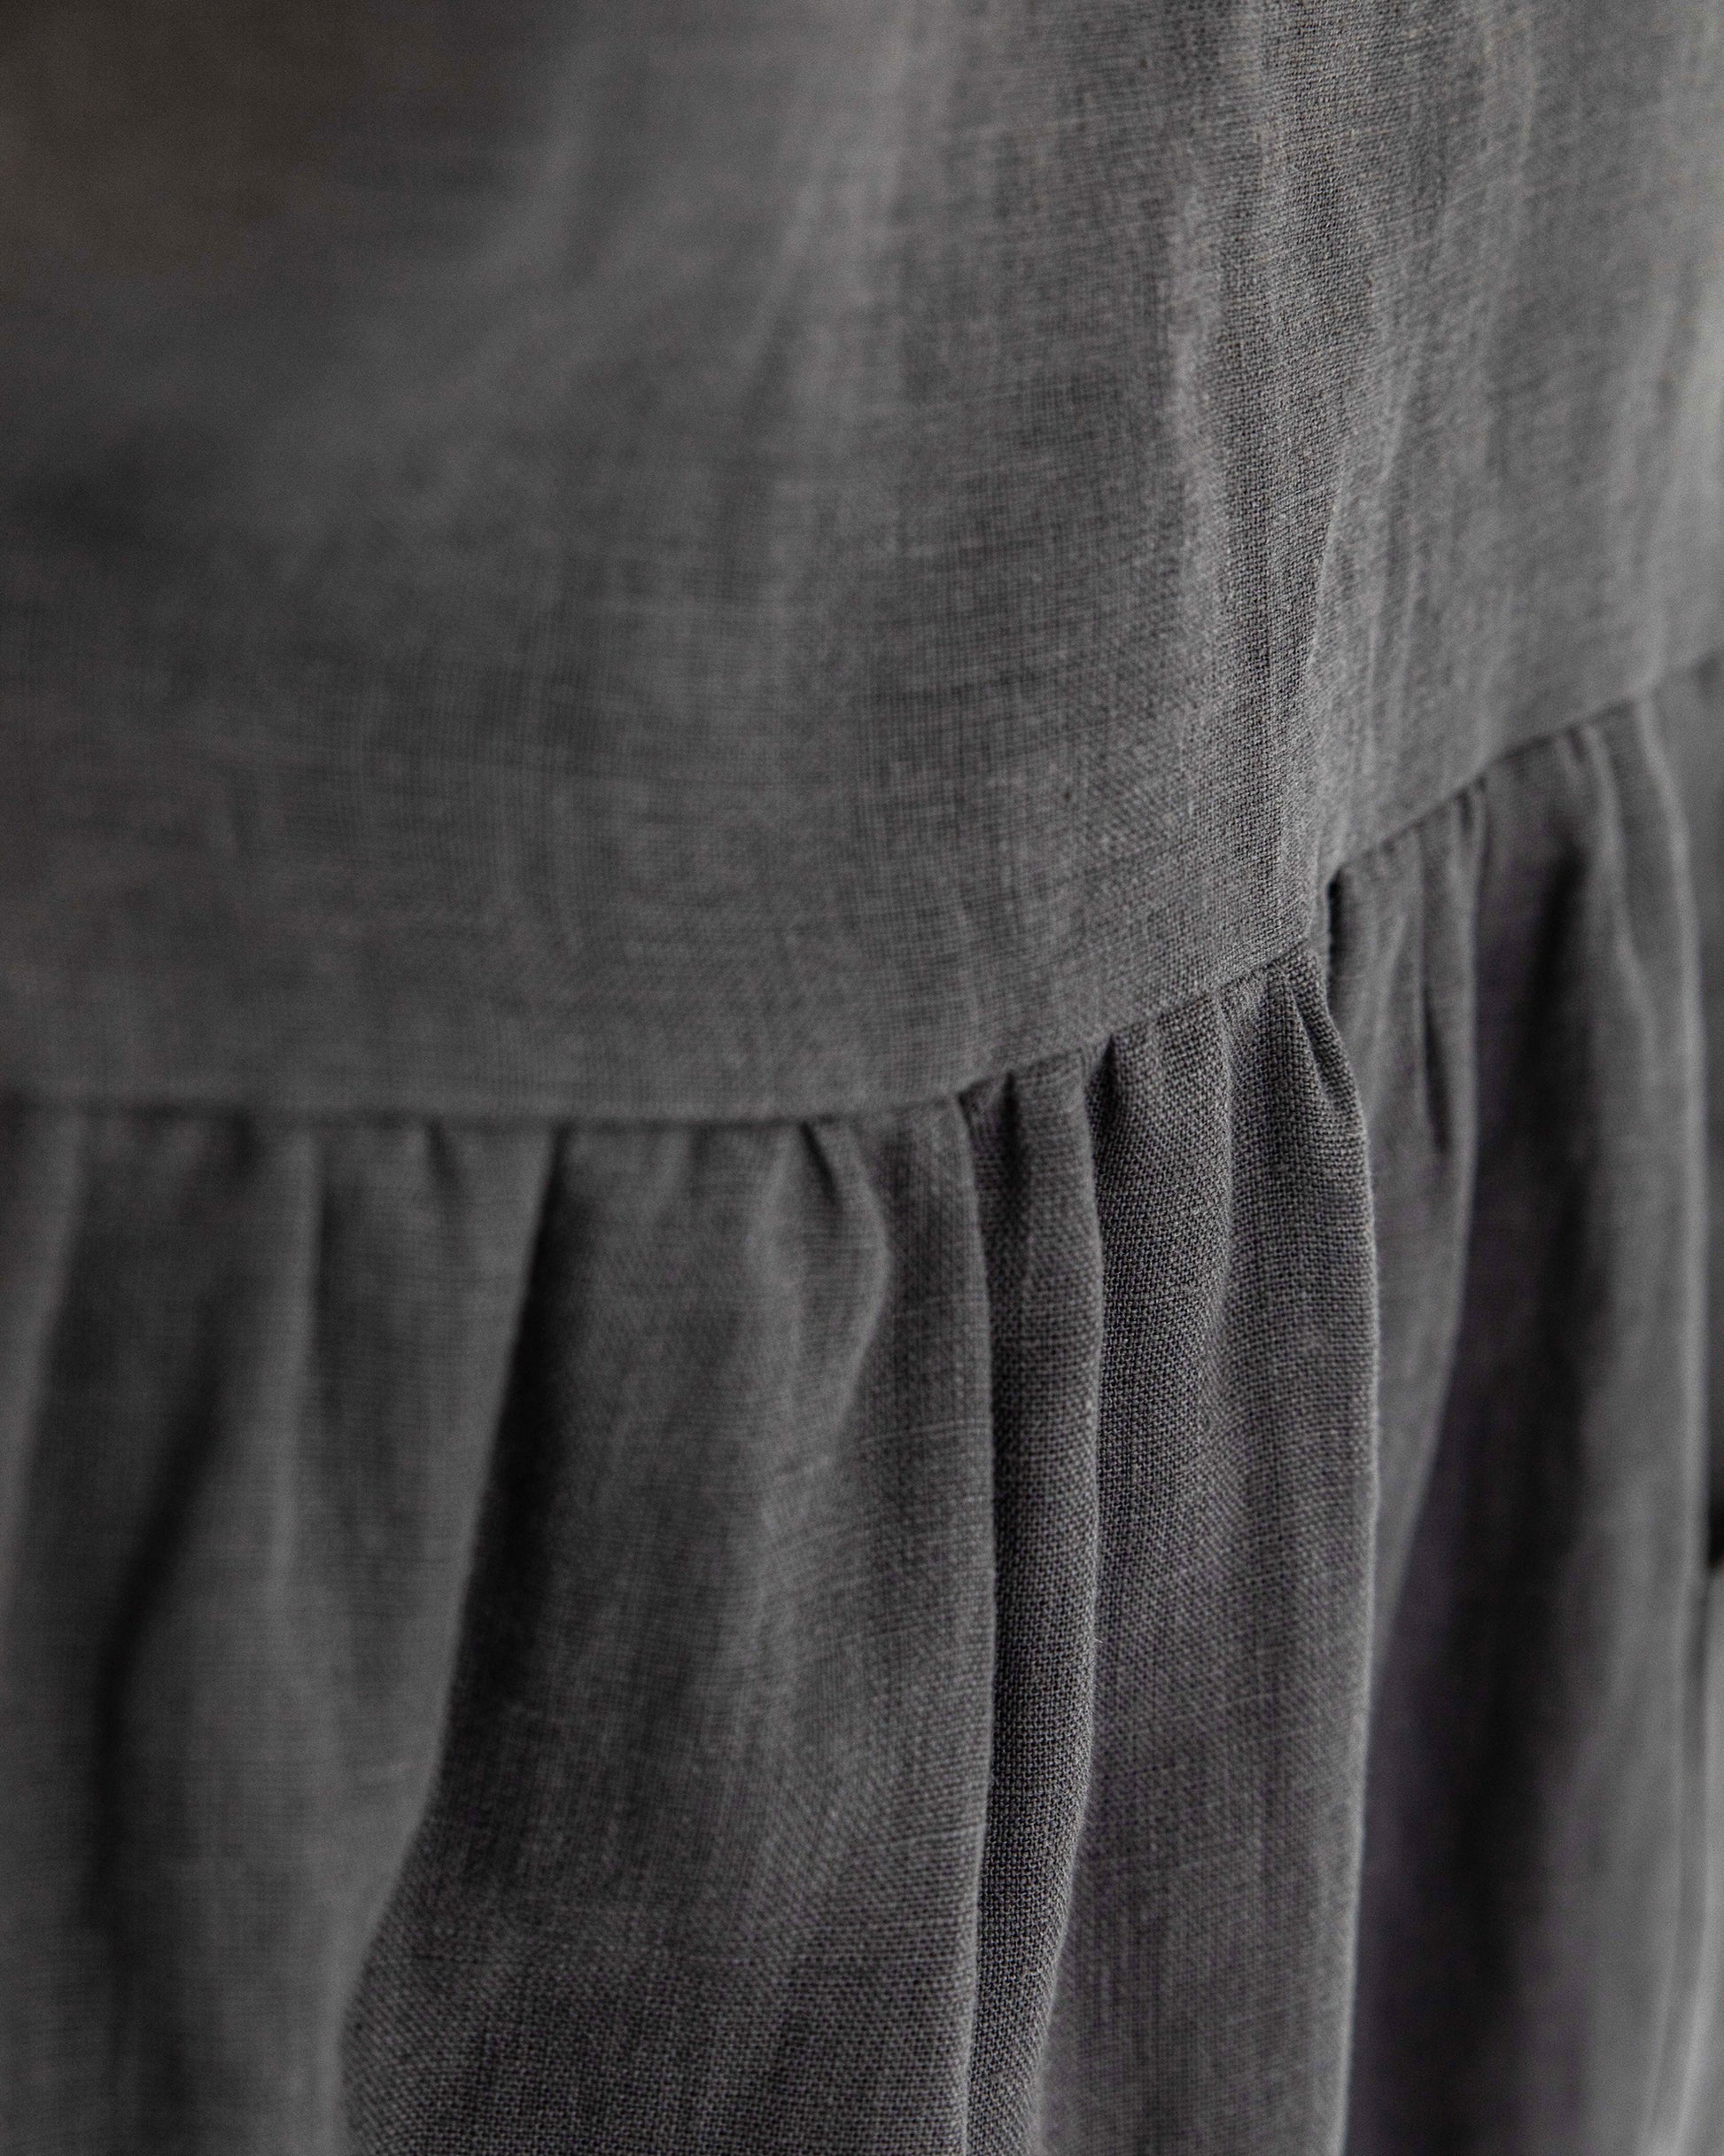 Pinafore apron dress in Charcoal gray - MagicLinen